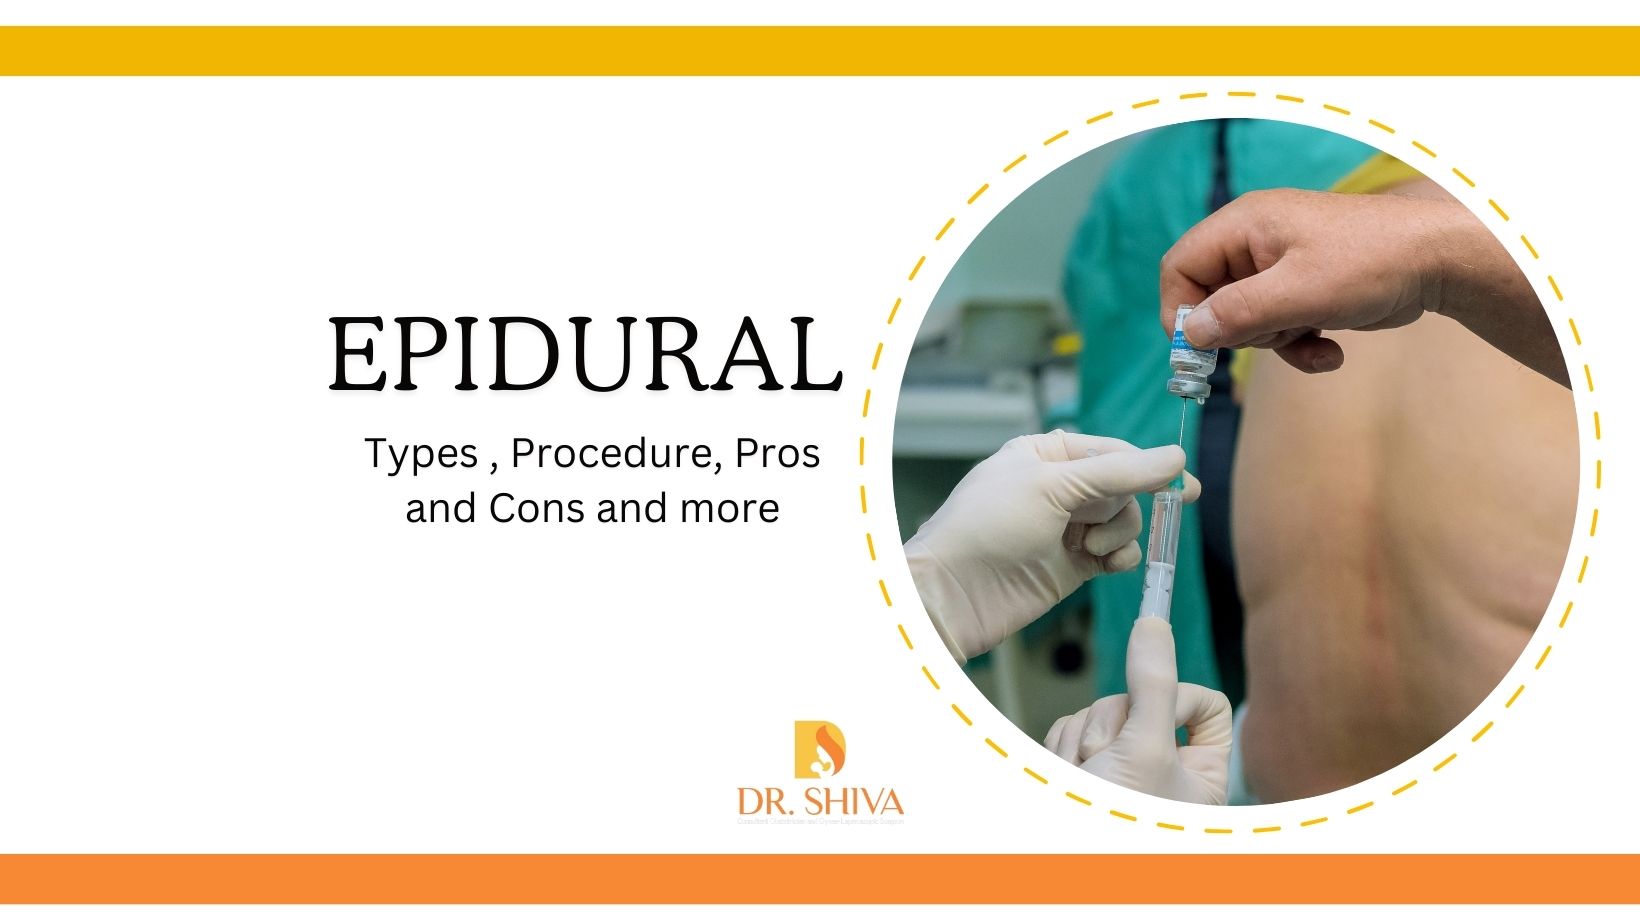 Epidural procedure